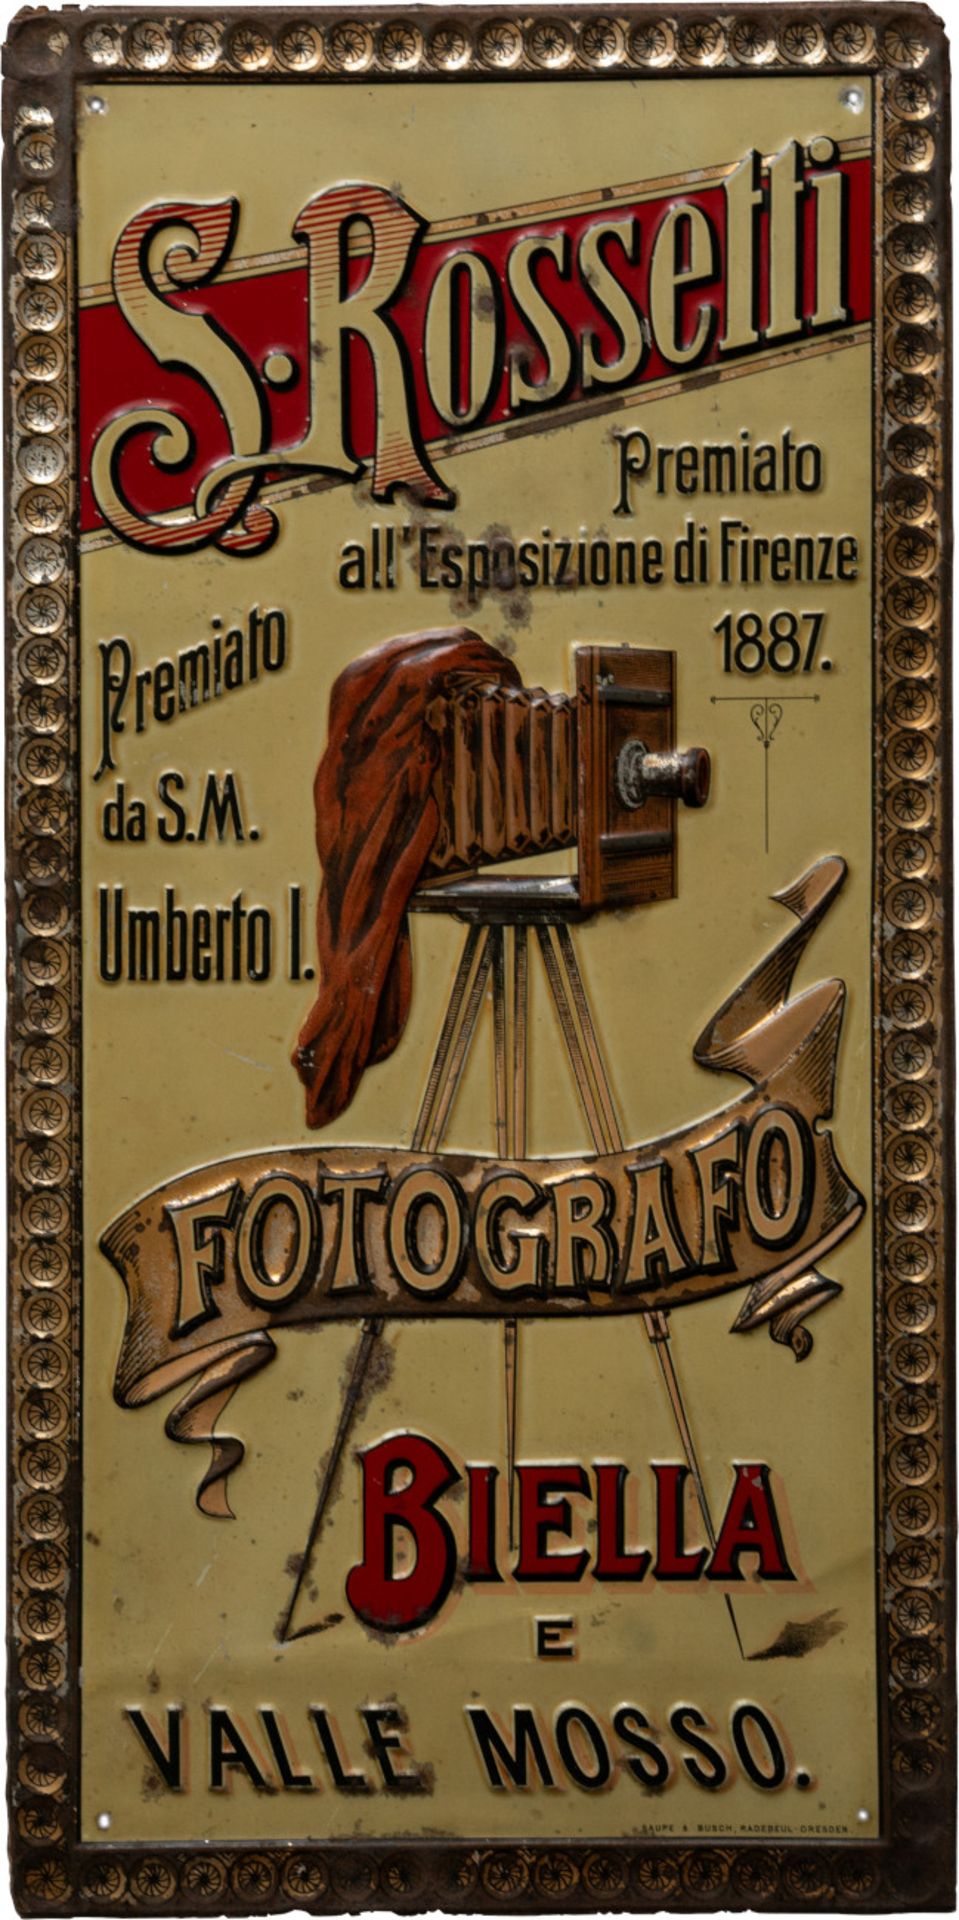 Blechschild S.Rosetti, Fotografo Biella/Italien, um 1900